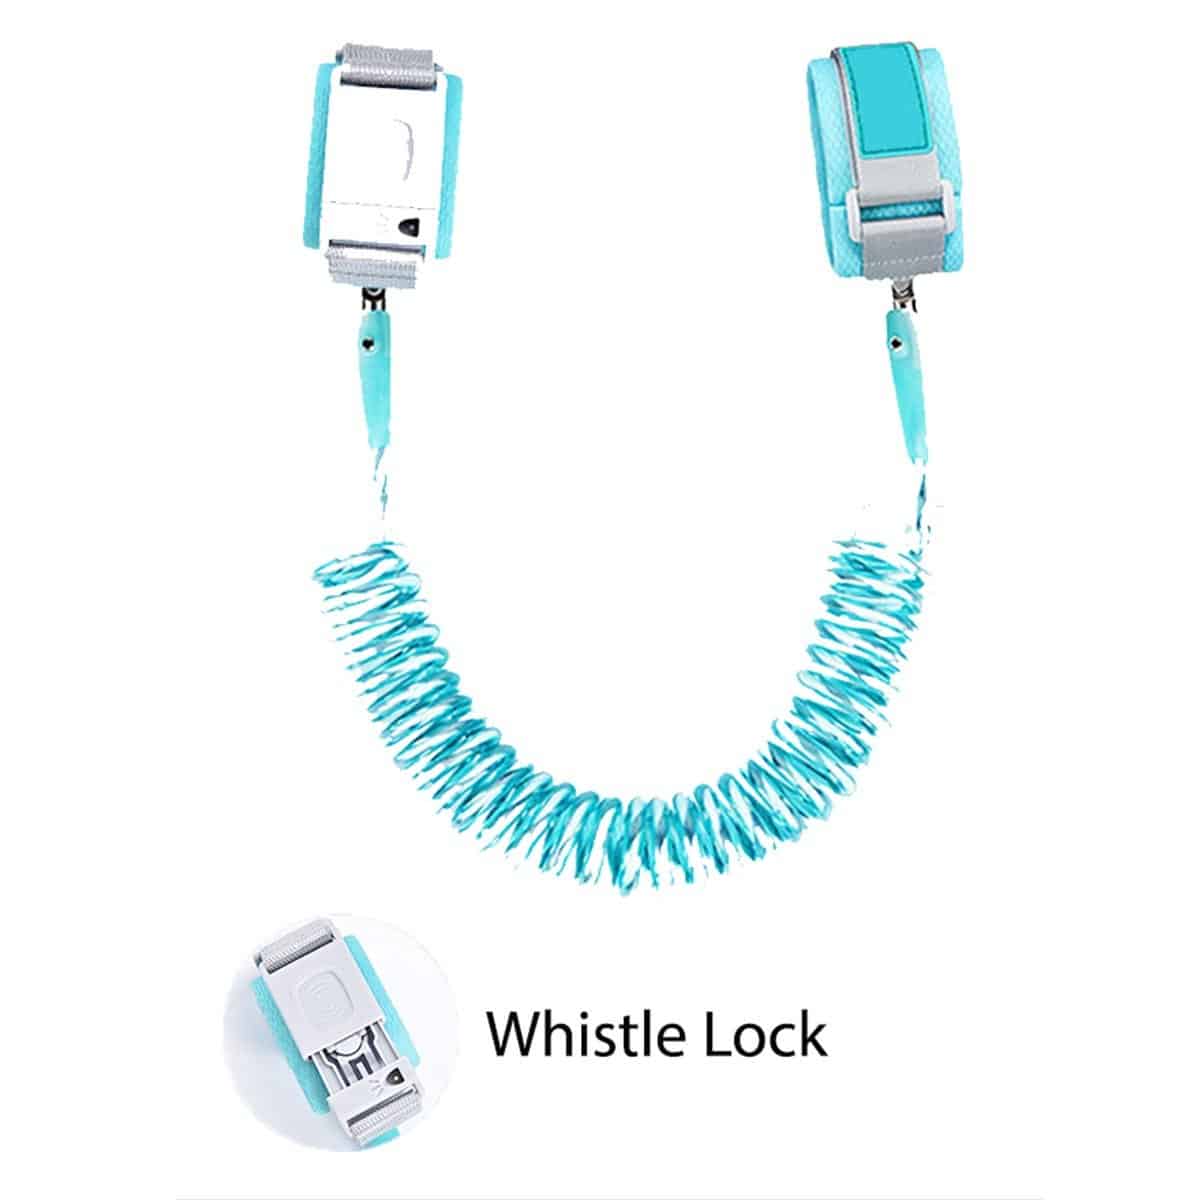 1.5m Anti Lost Rope Children Whistle Lock - Blue